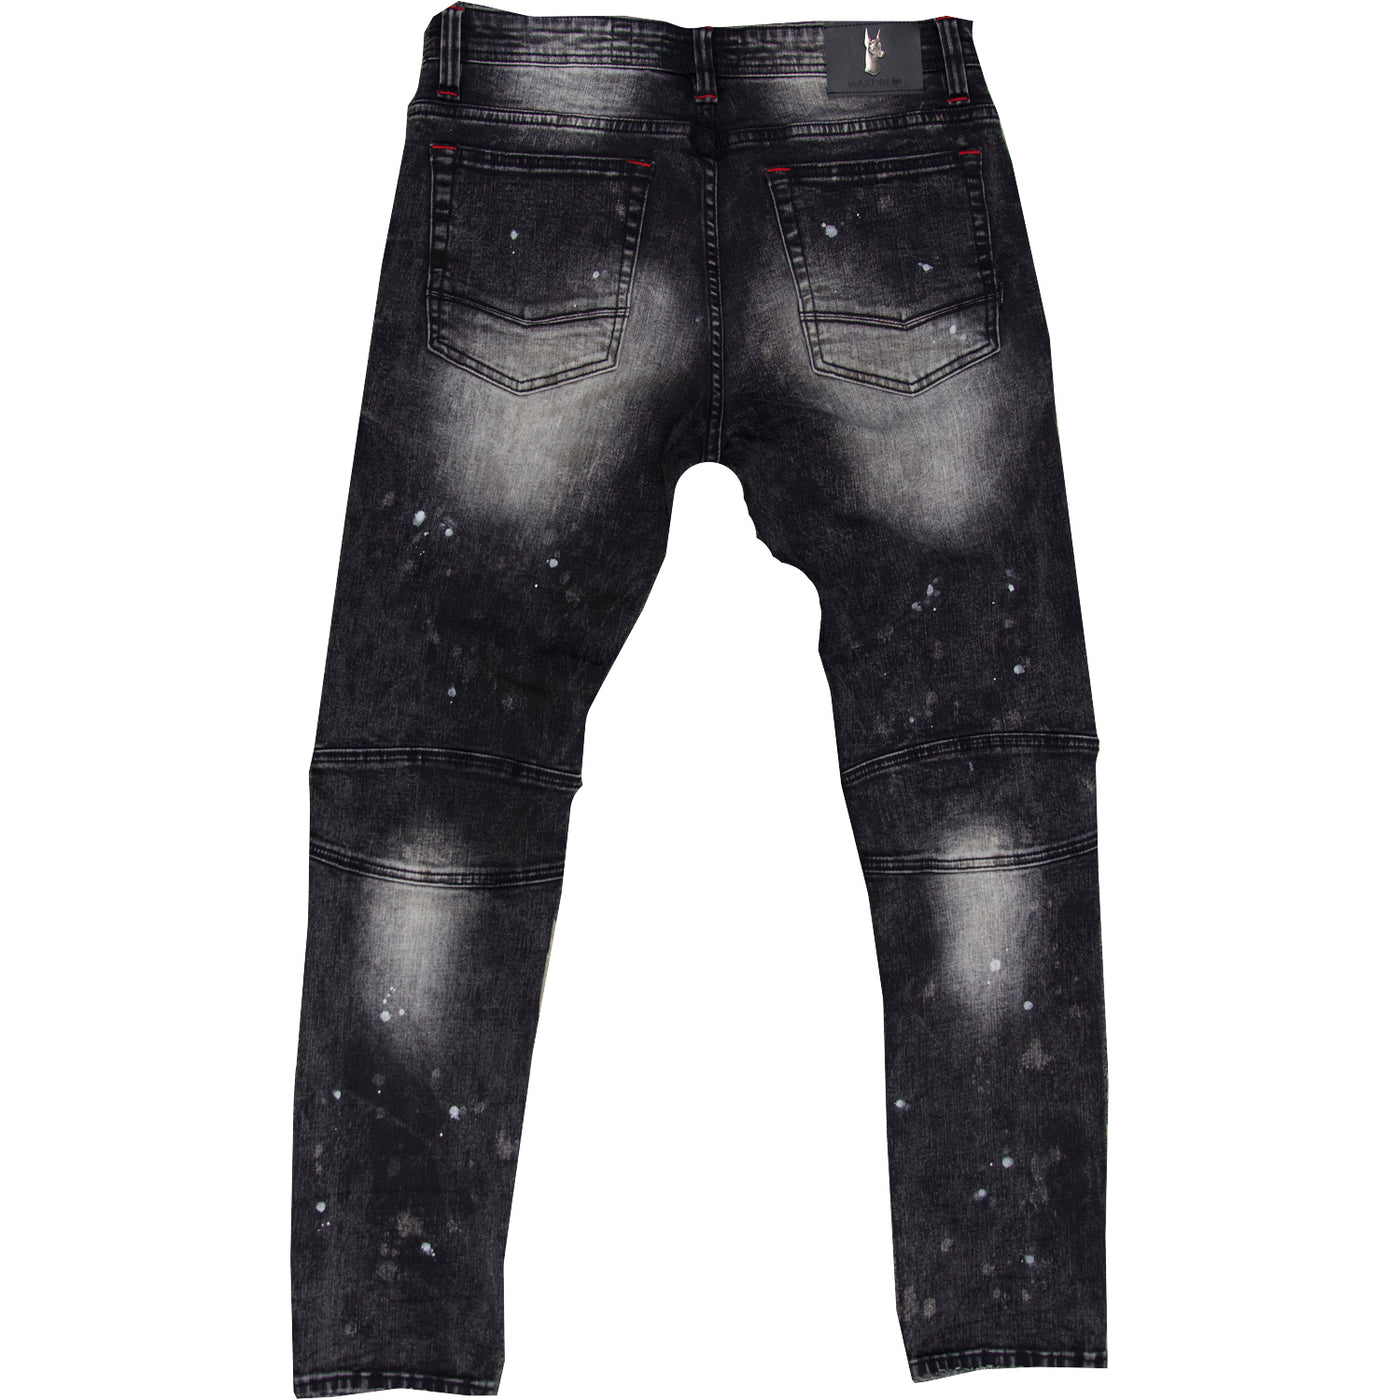 M1771 Makobi Petani Shredded Jeans With Bleach Spots - Black Wash